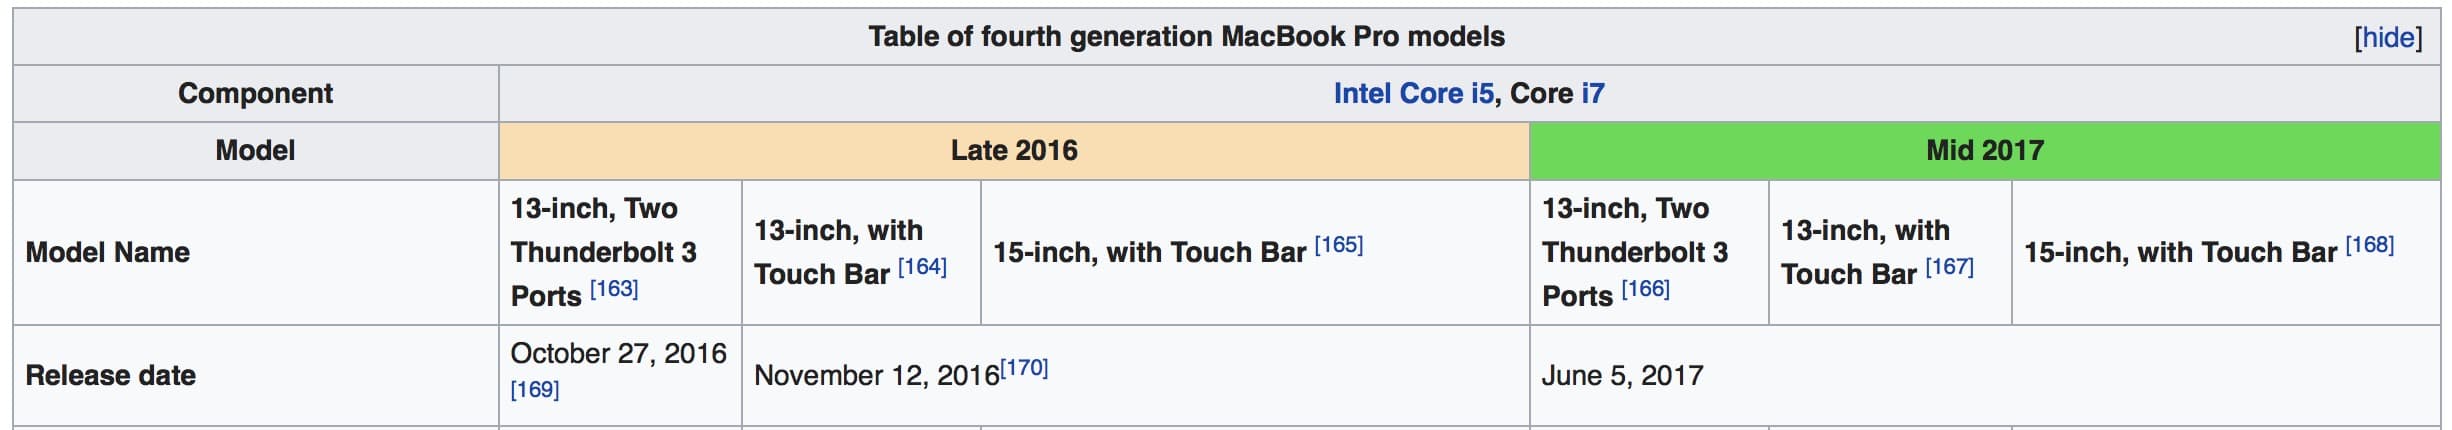 Macbook Timeline 2016 To 2017